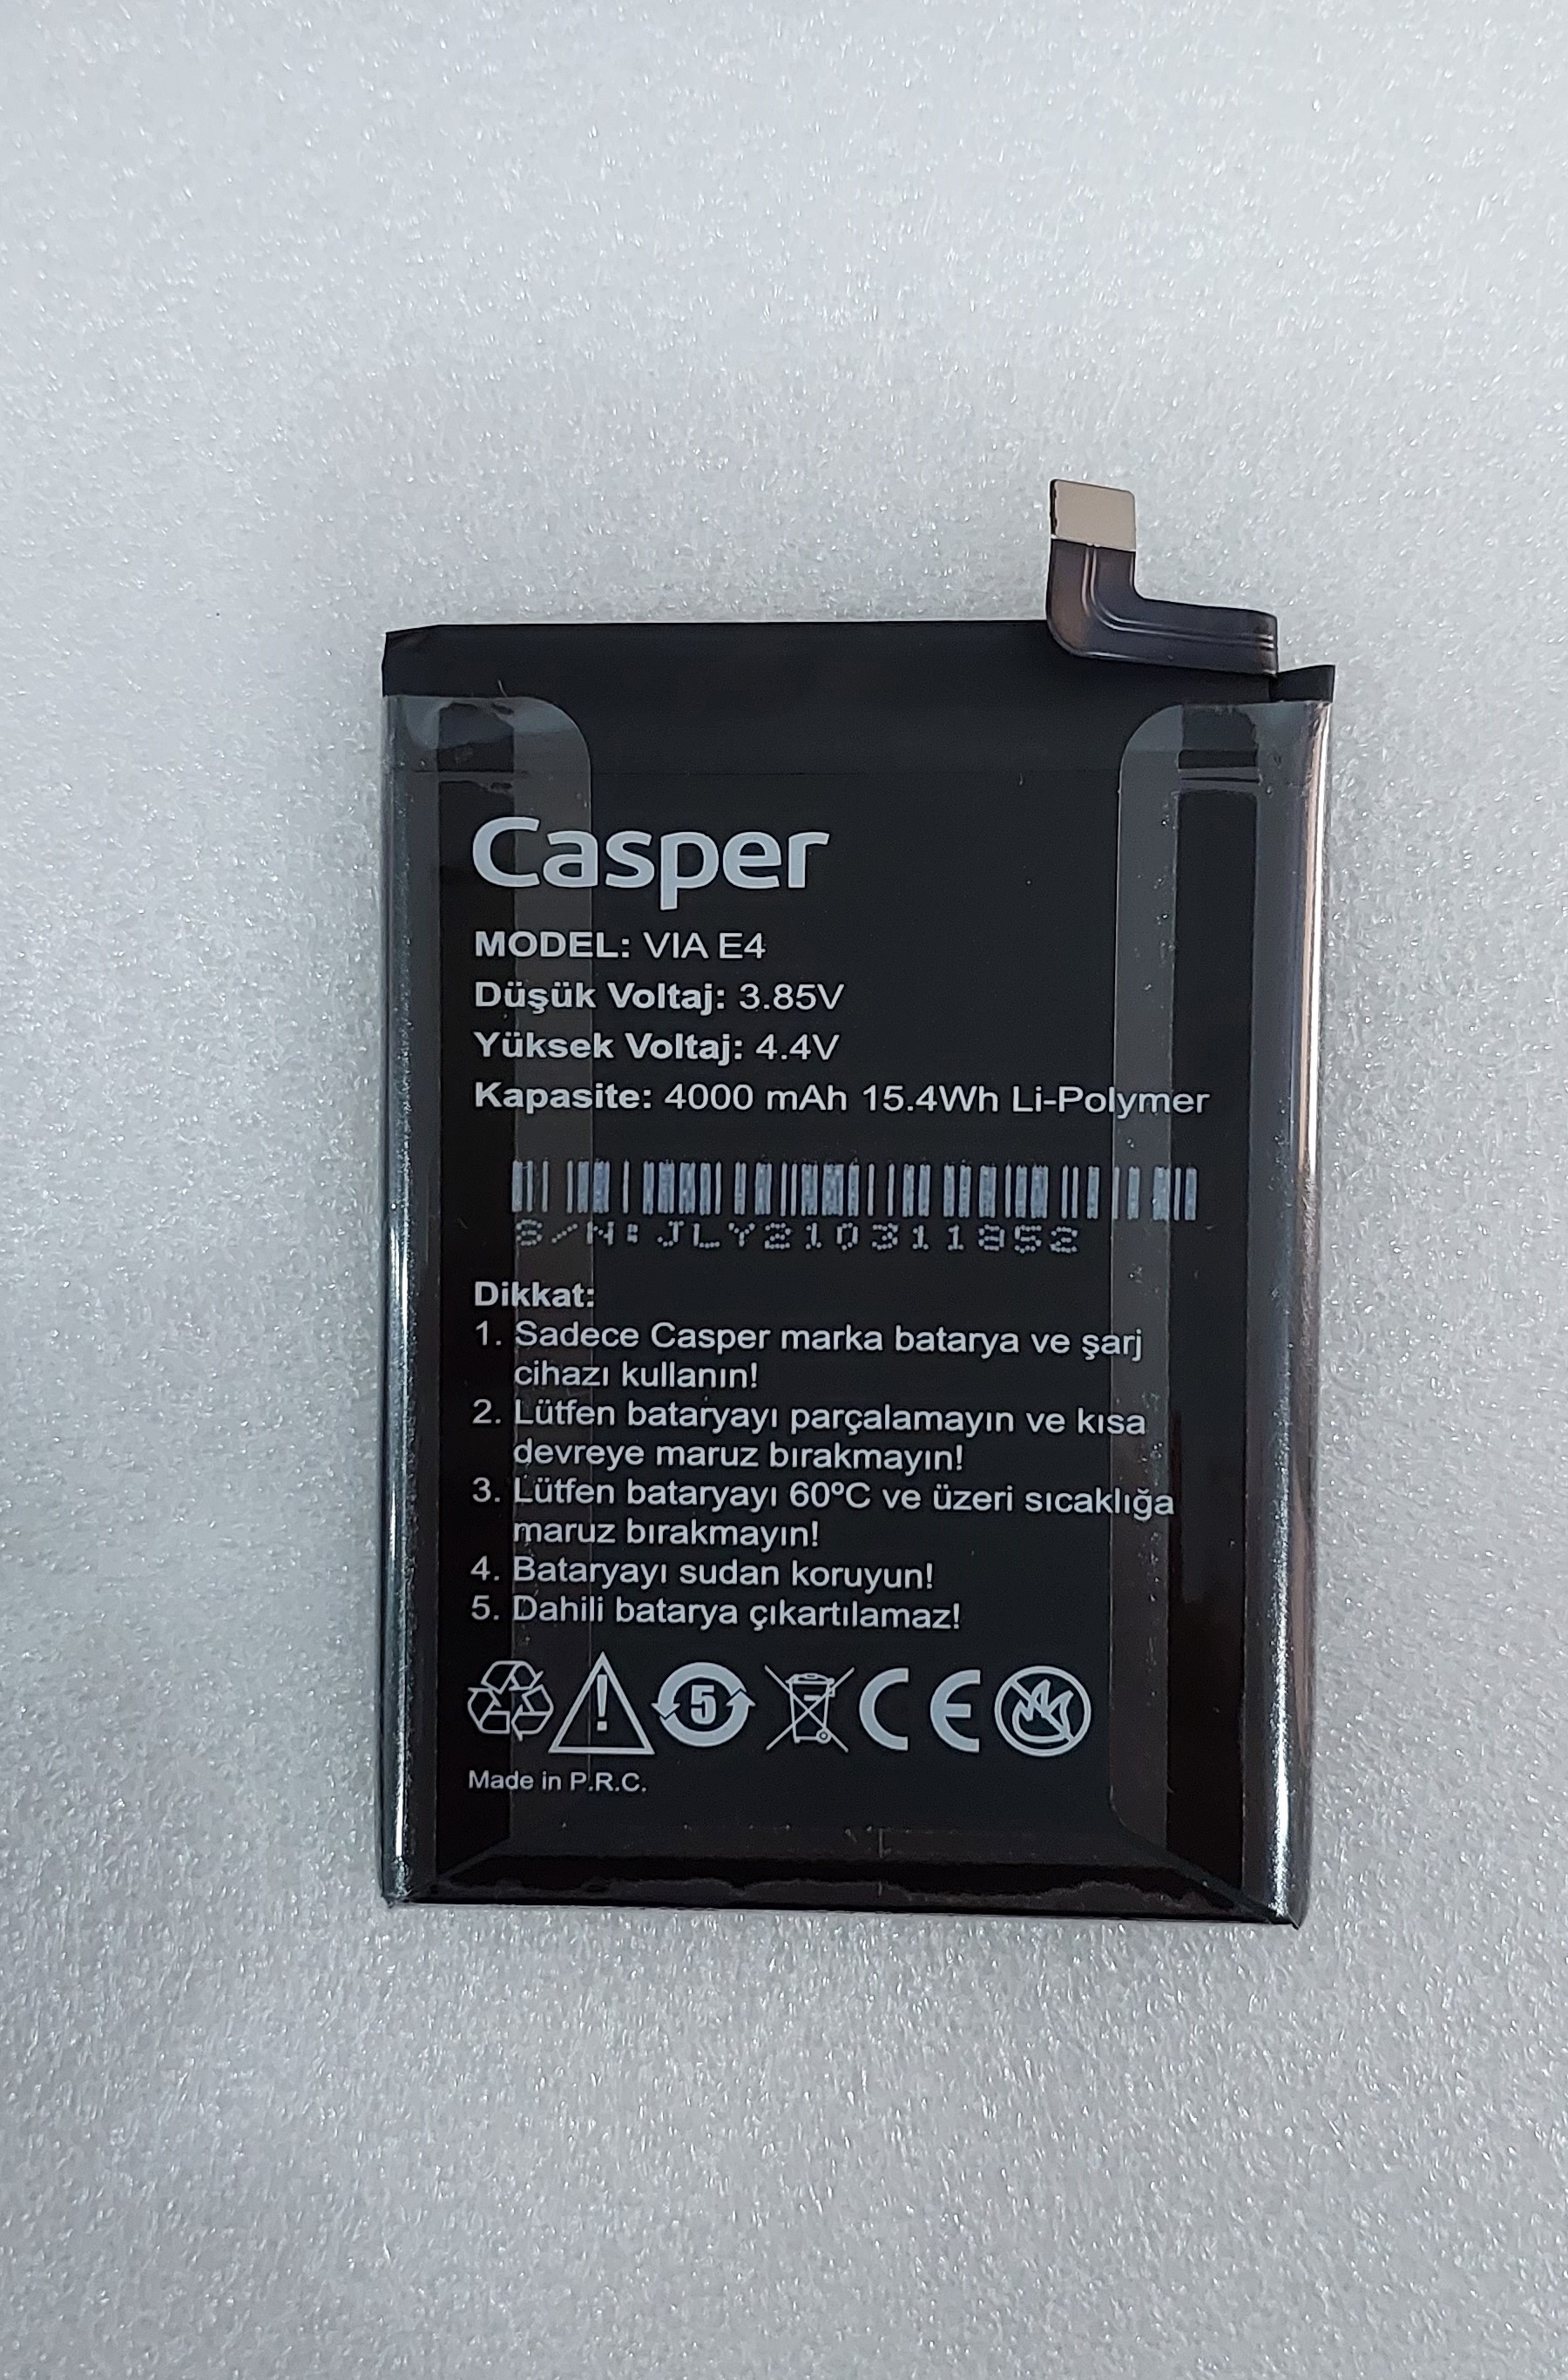 Yetkili Servisten Casper E4 Batarya